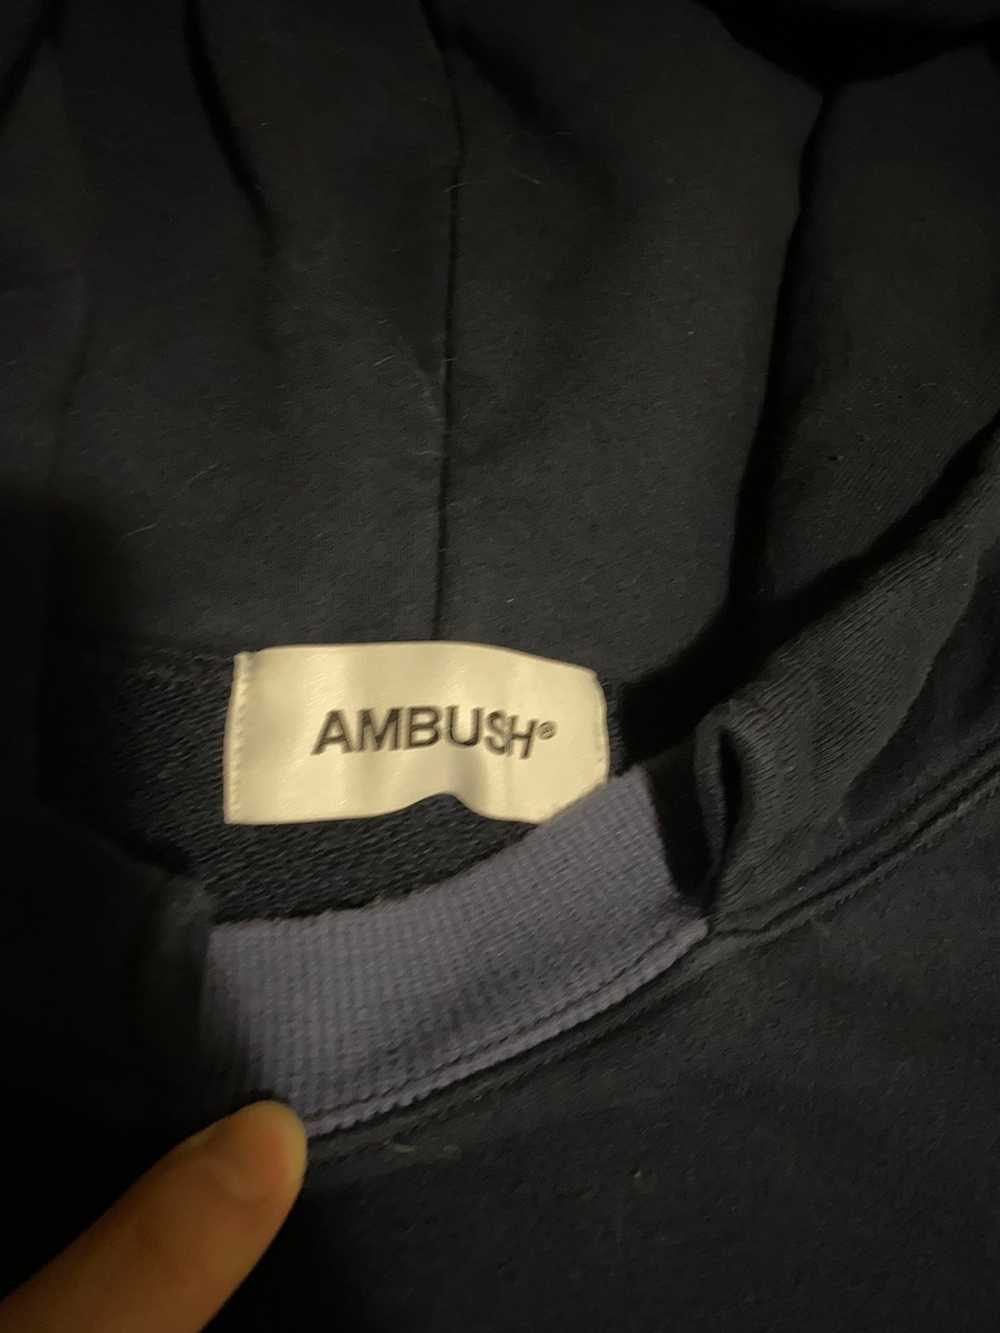 Ambush Design Ambush hoodie - image 2